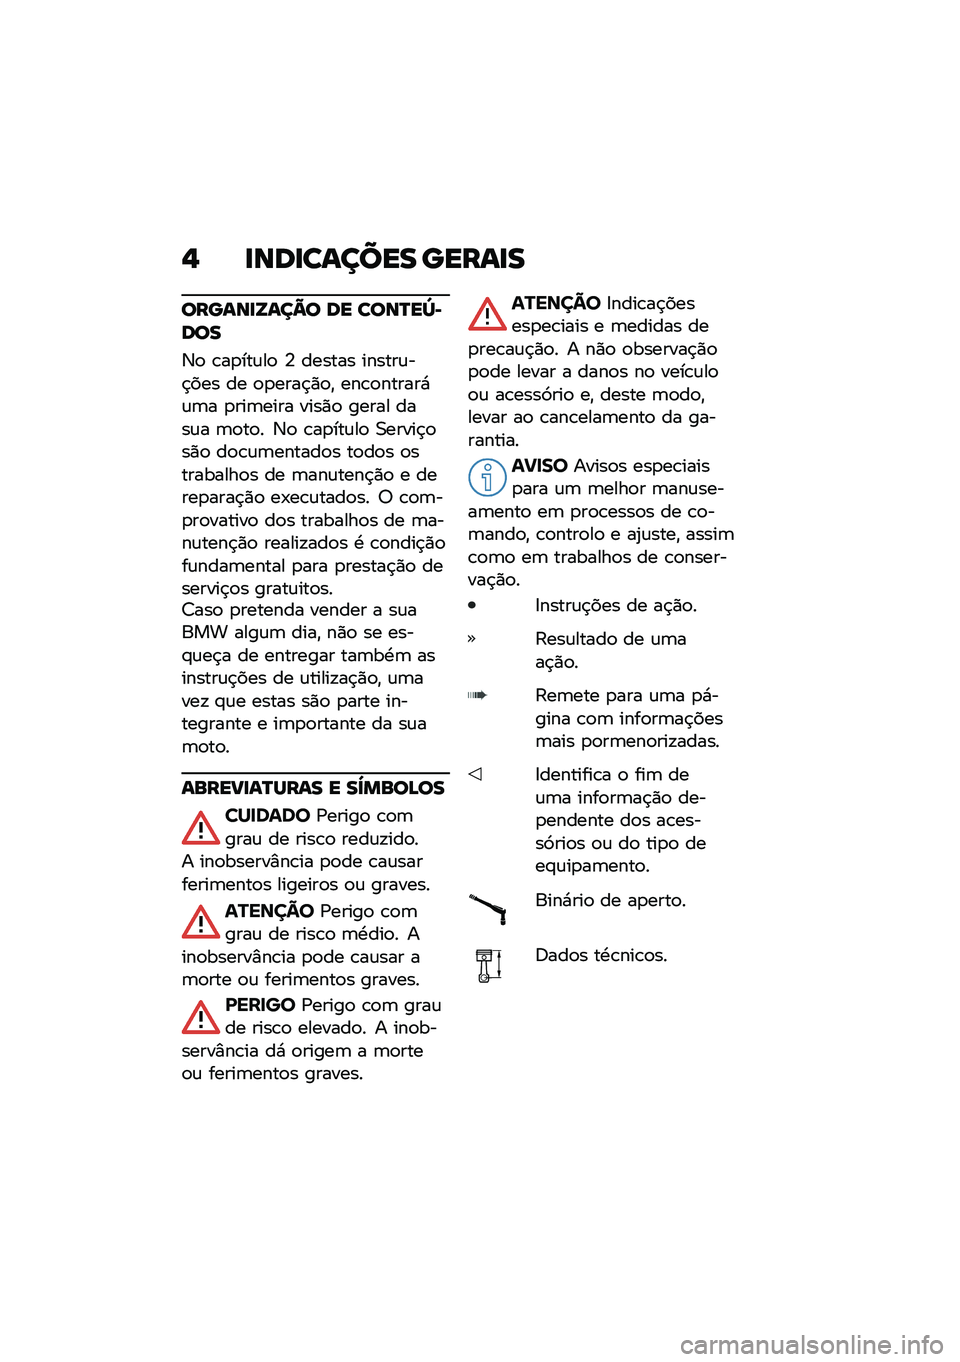 BMW MOTORRAD R NINE T 2020  Manual do condutor (in Portuguese) �, �
���
������ �����
�
������
�V���@� �� ����N��a�*���
�3�
 �\b��
���\f��
 �4 ������ ������\f��$��� �� �
�
����$�)�
�" ���\b�
������*�\f�	